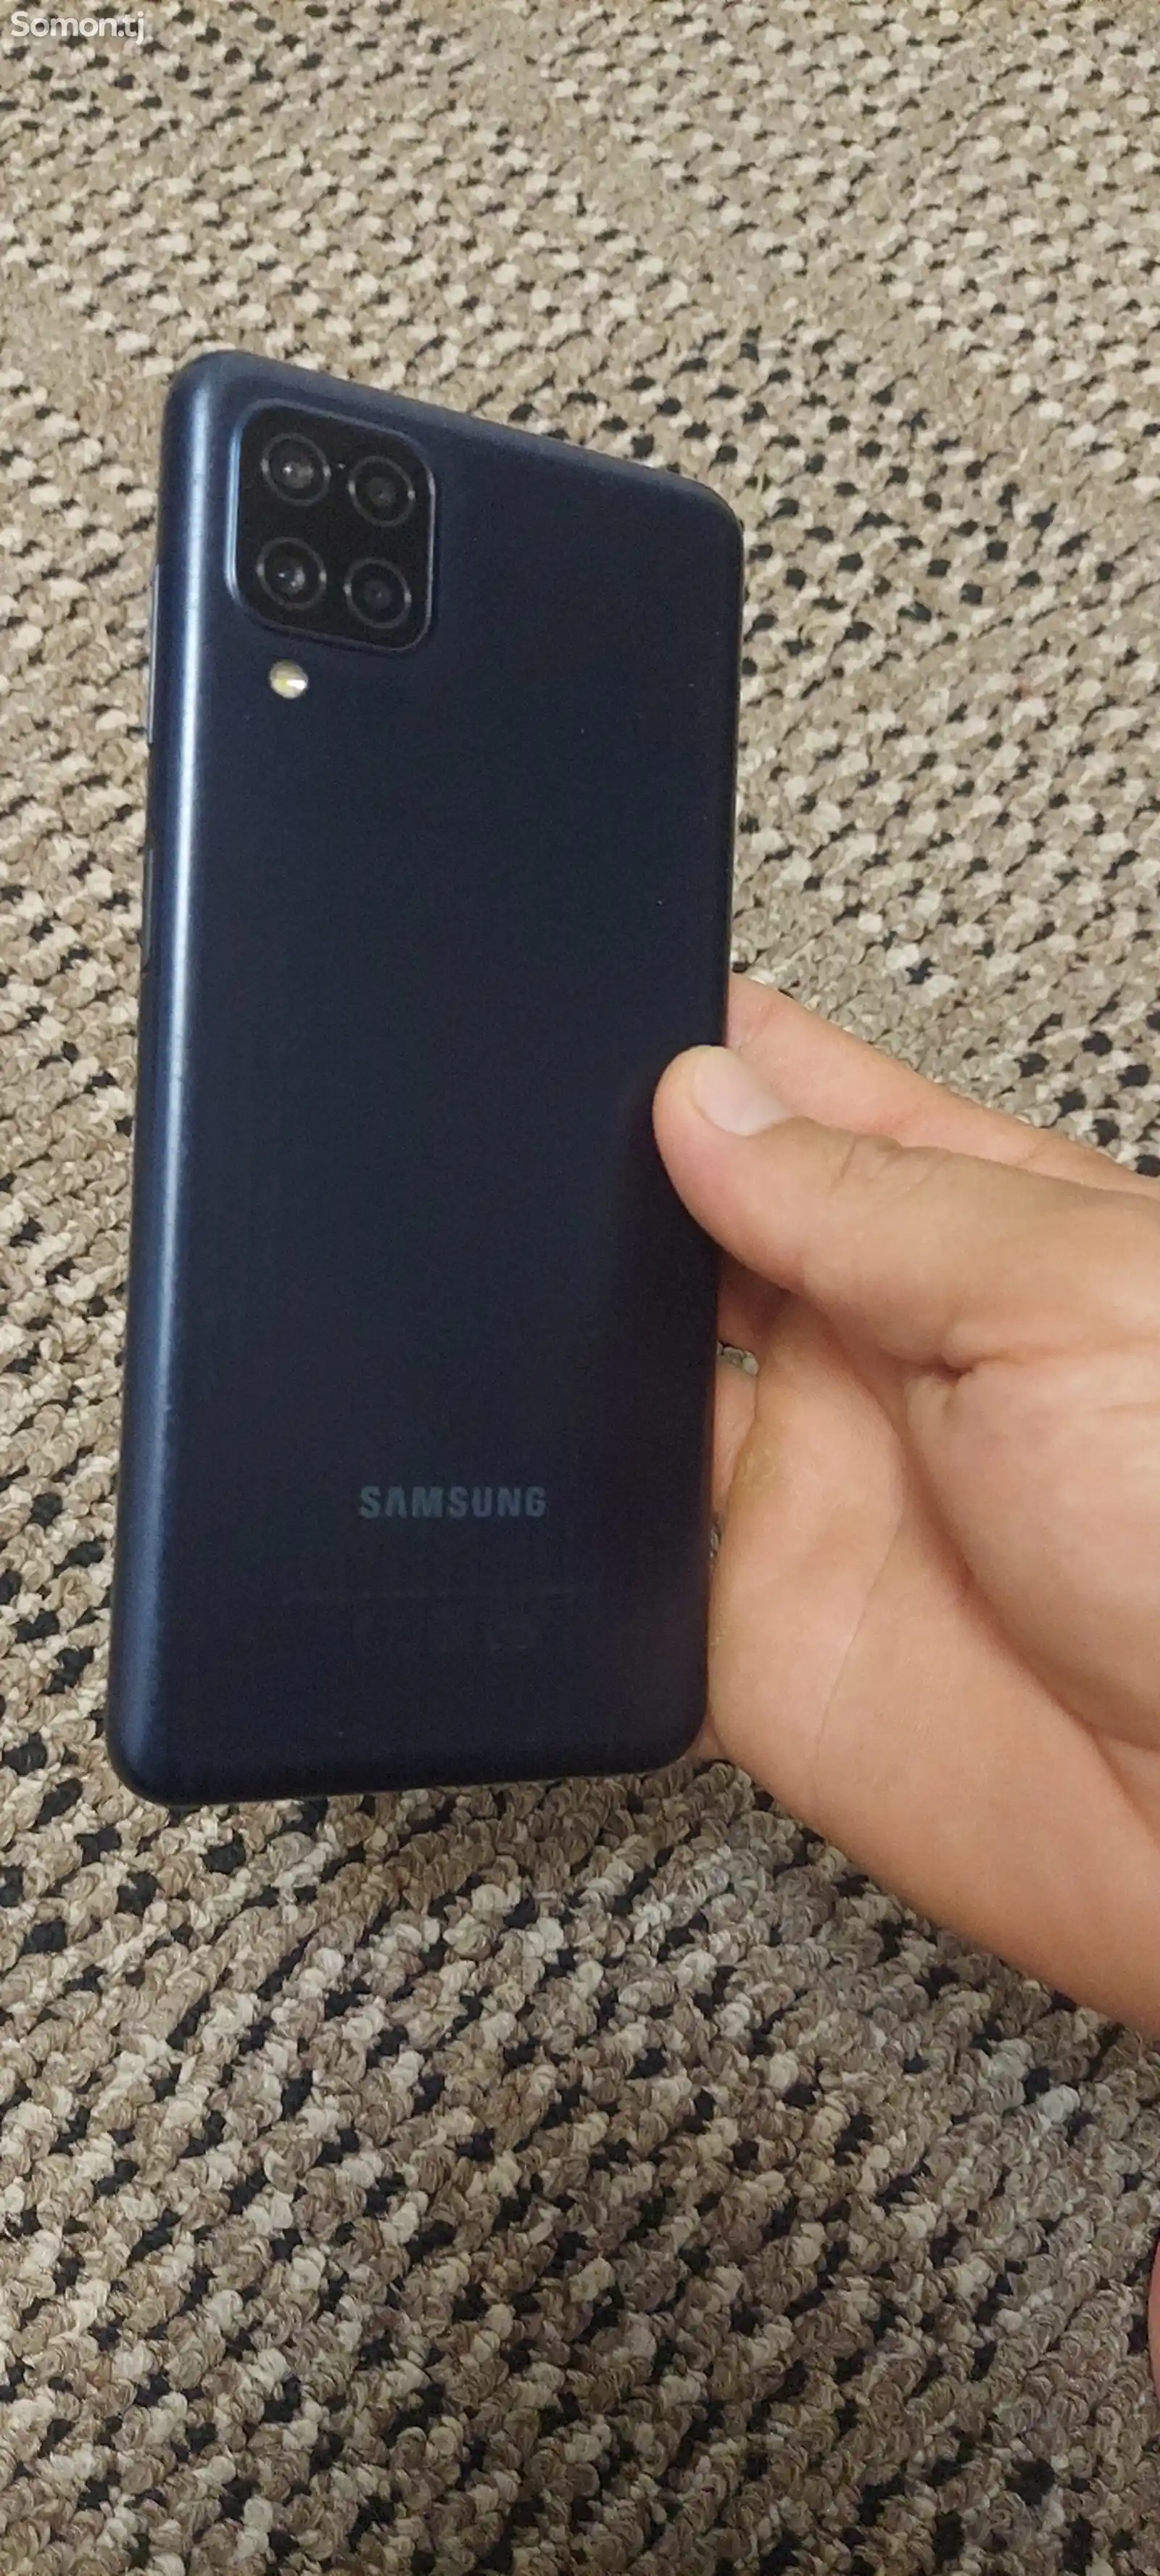 Samsung Galaxy M12-5